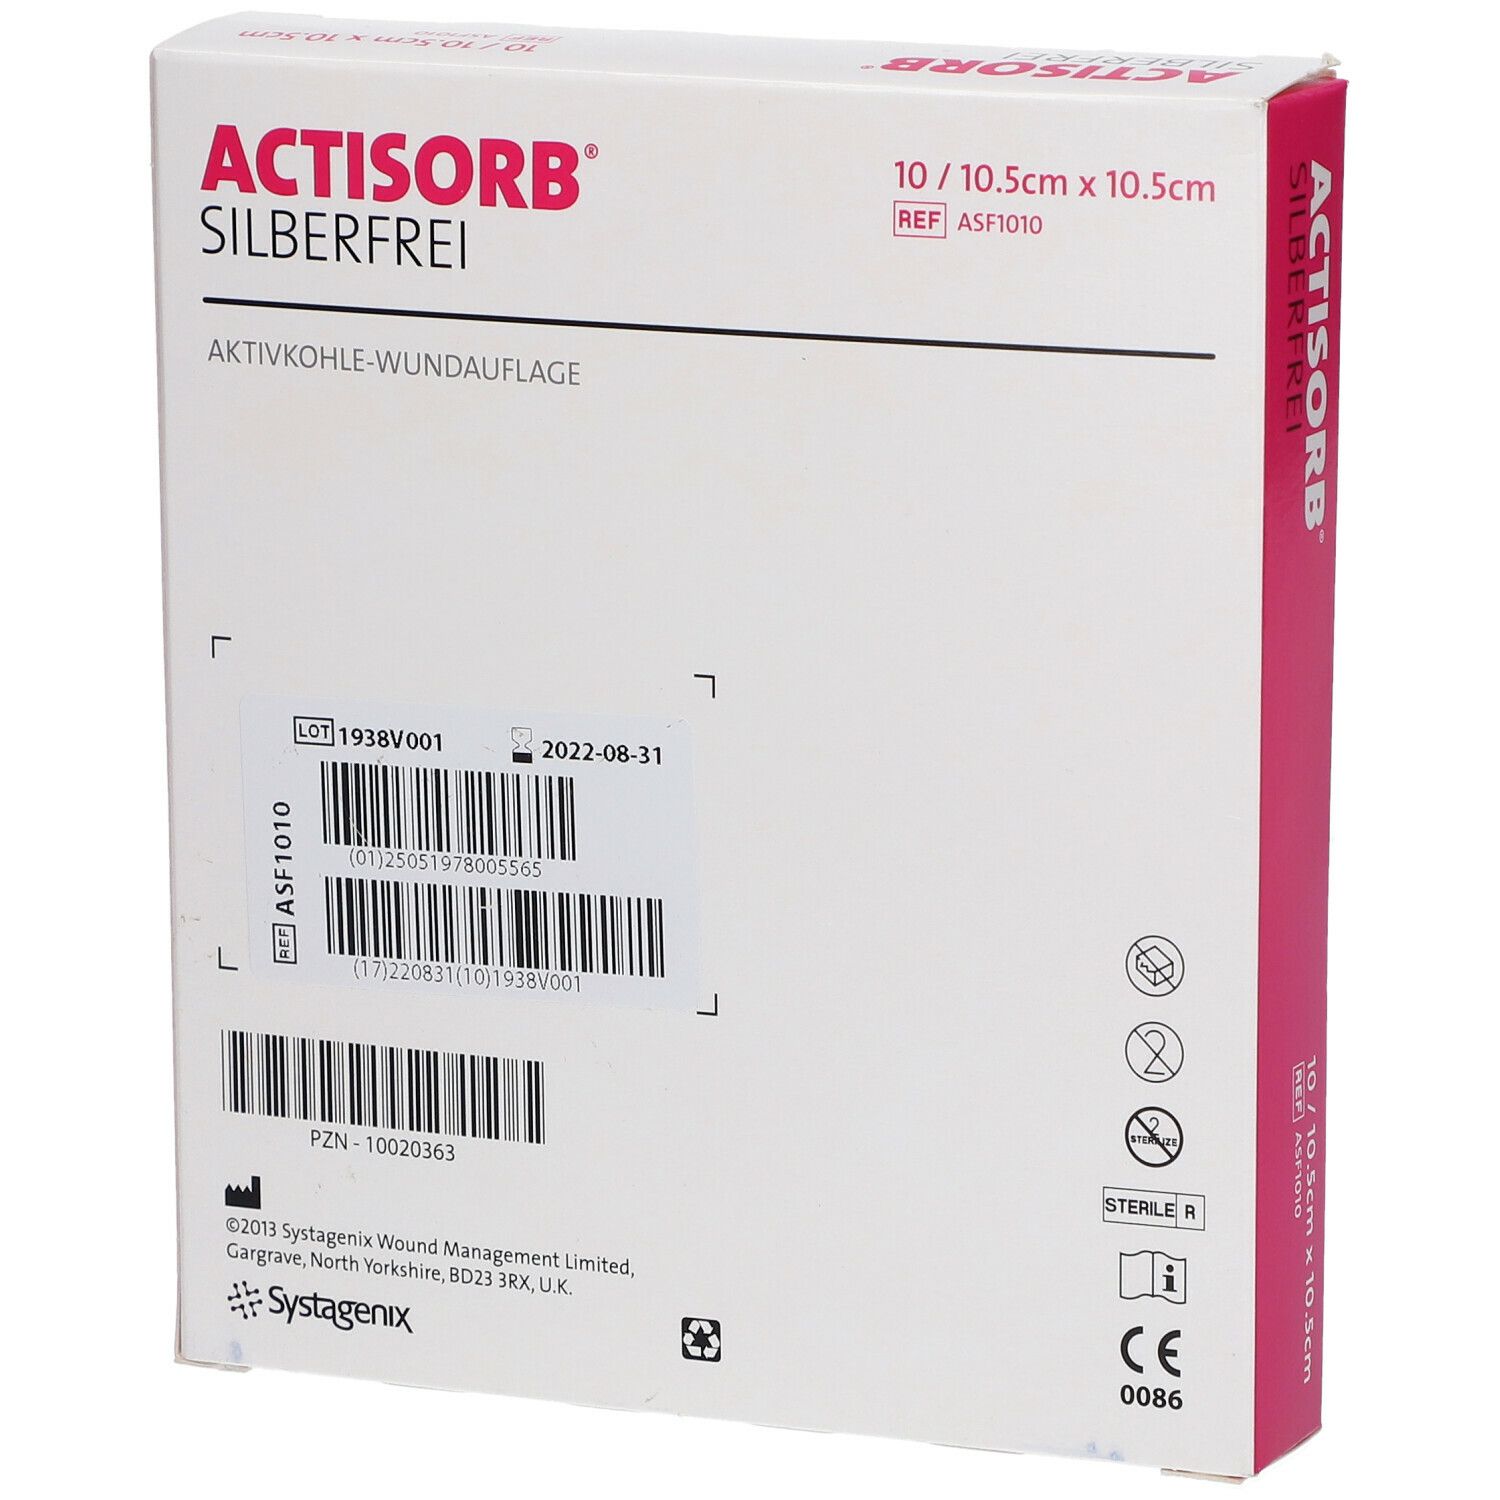 ACTISORB® SILBERFREI 10,5 x 10,5 cm steril